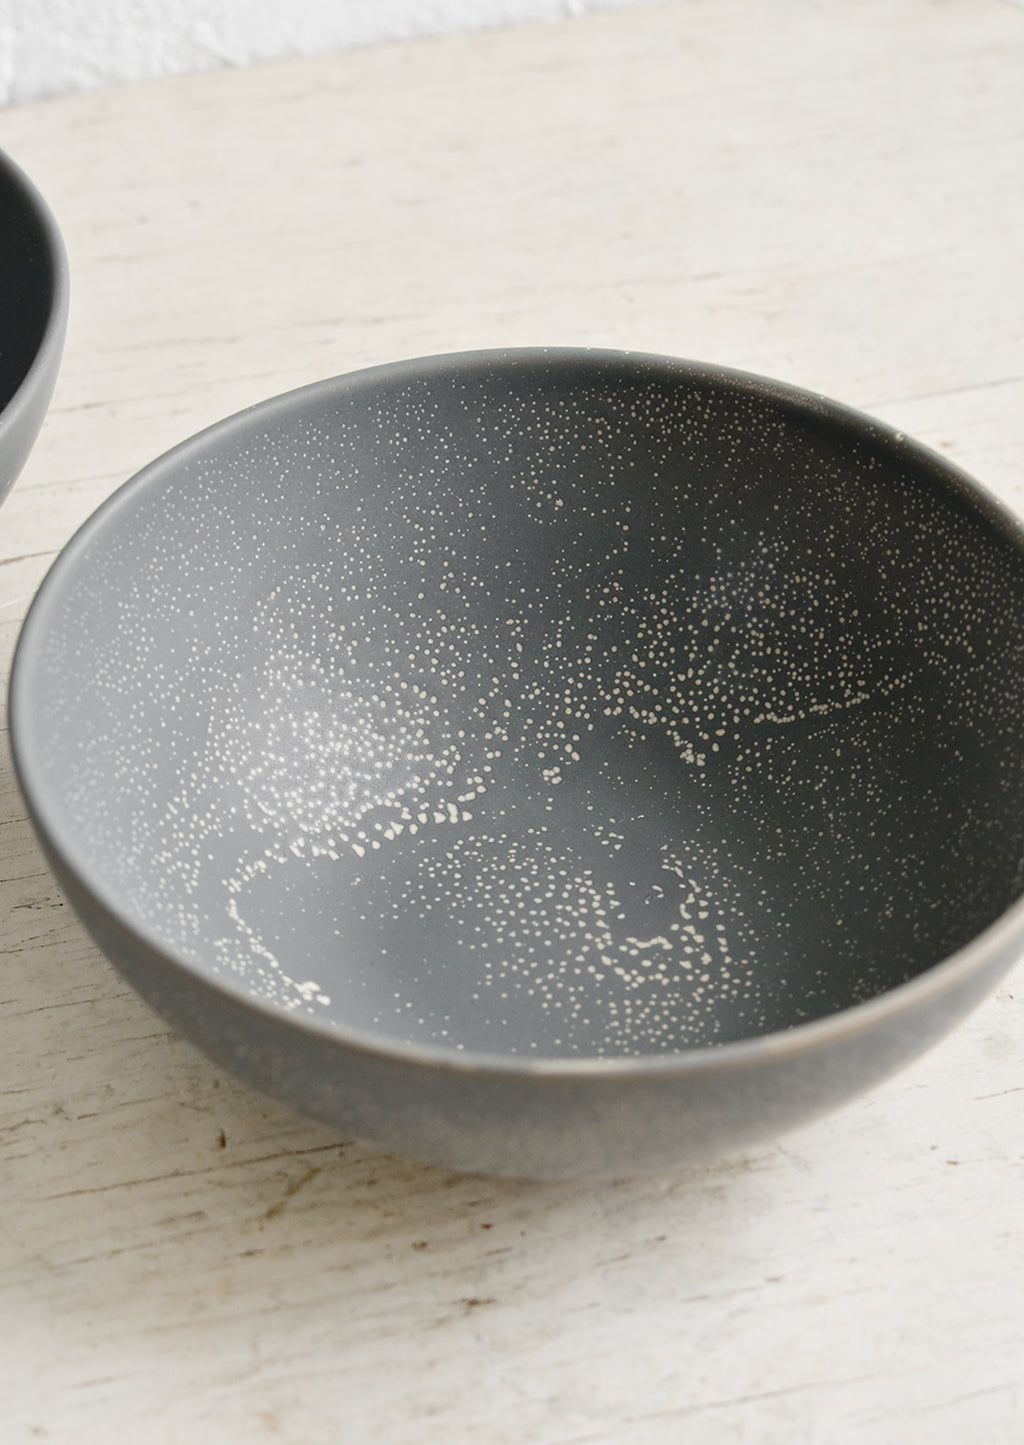 2: A dark grey ceramic bowl with light tan speckles.